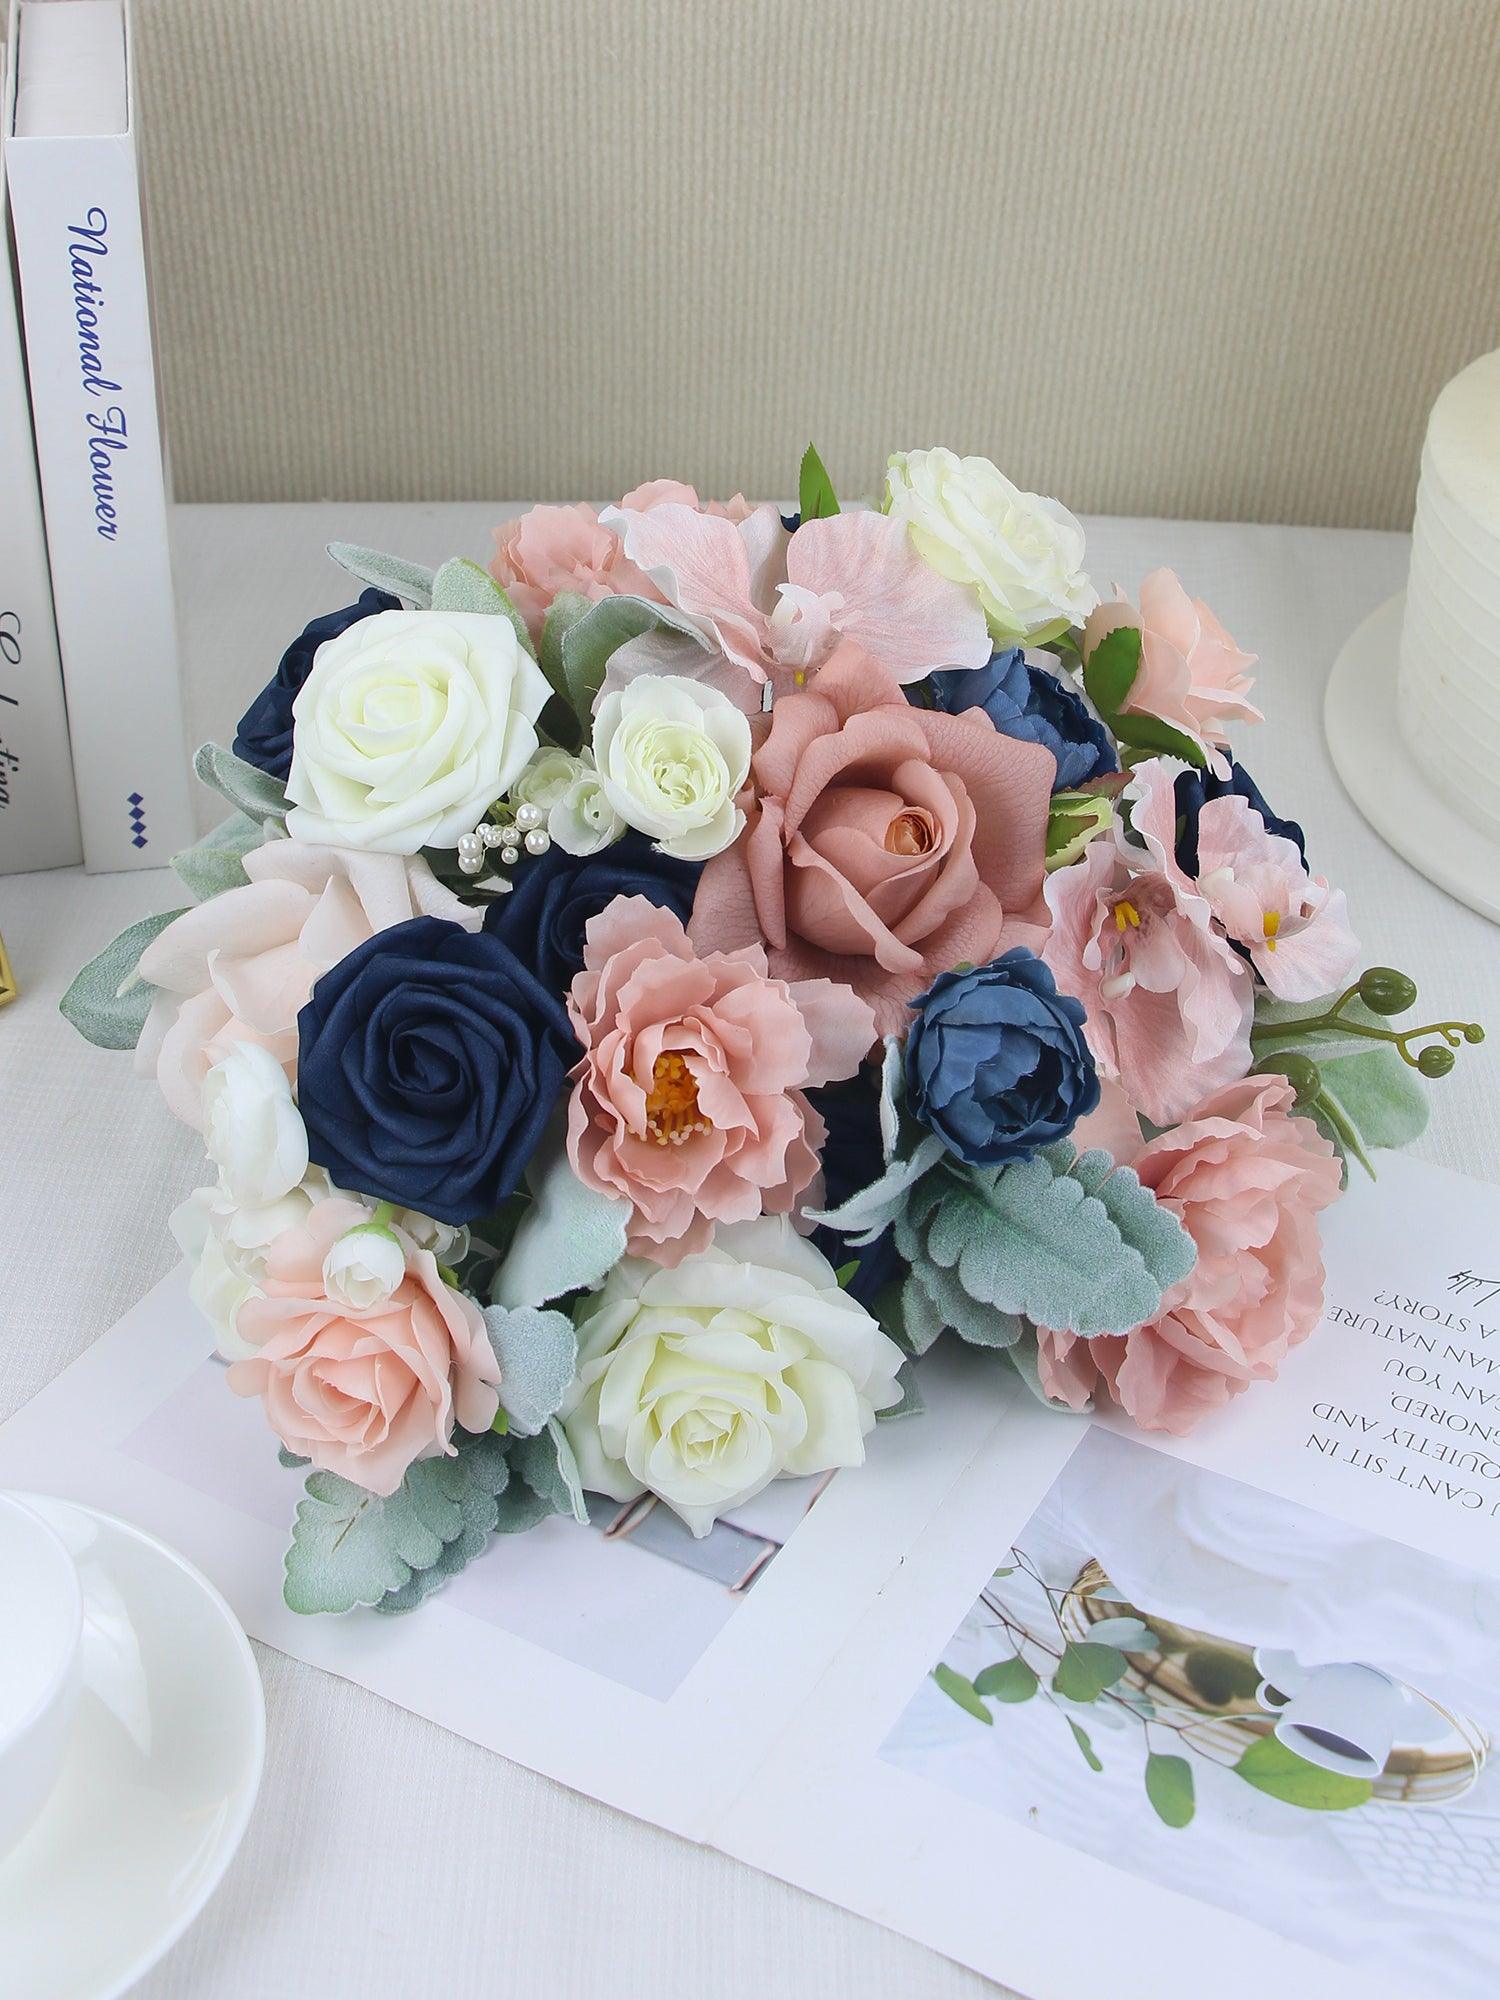 12.2 inch wide Dusty Rose & Navy Blue Bridal Bouquet - Rinlong Flower